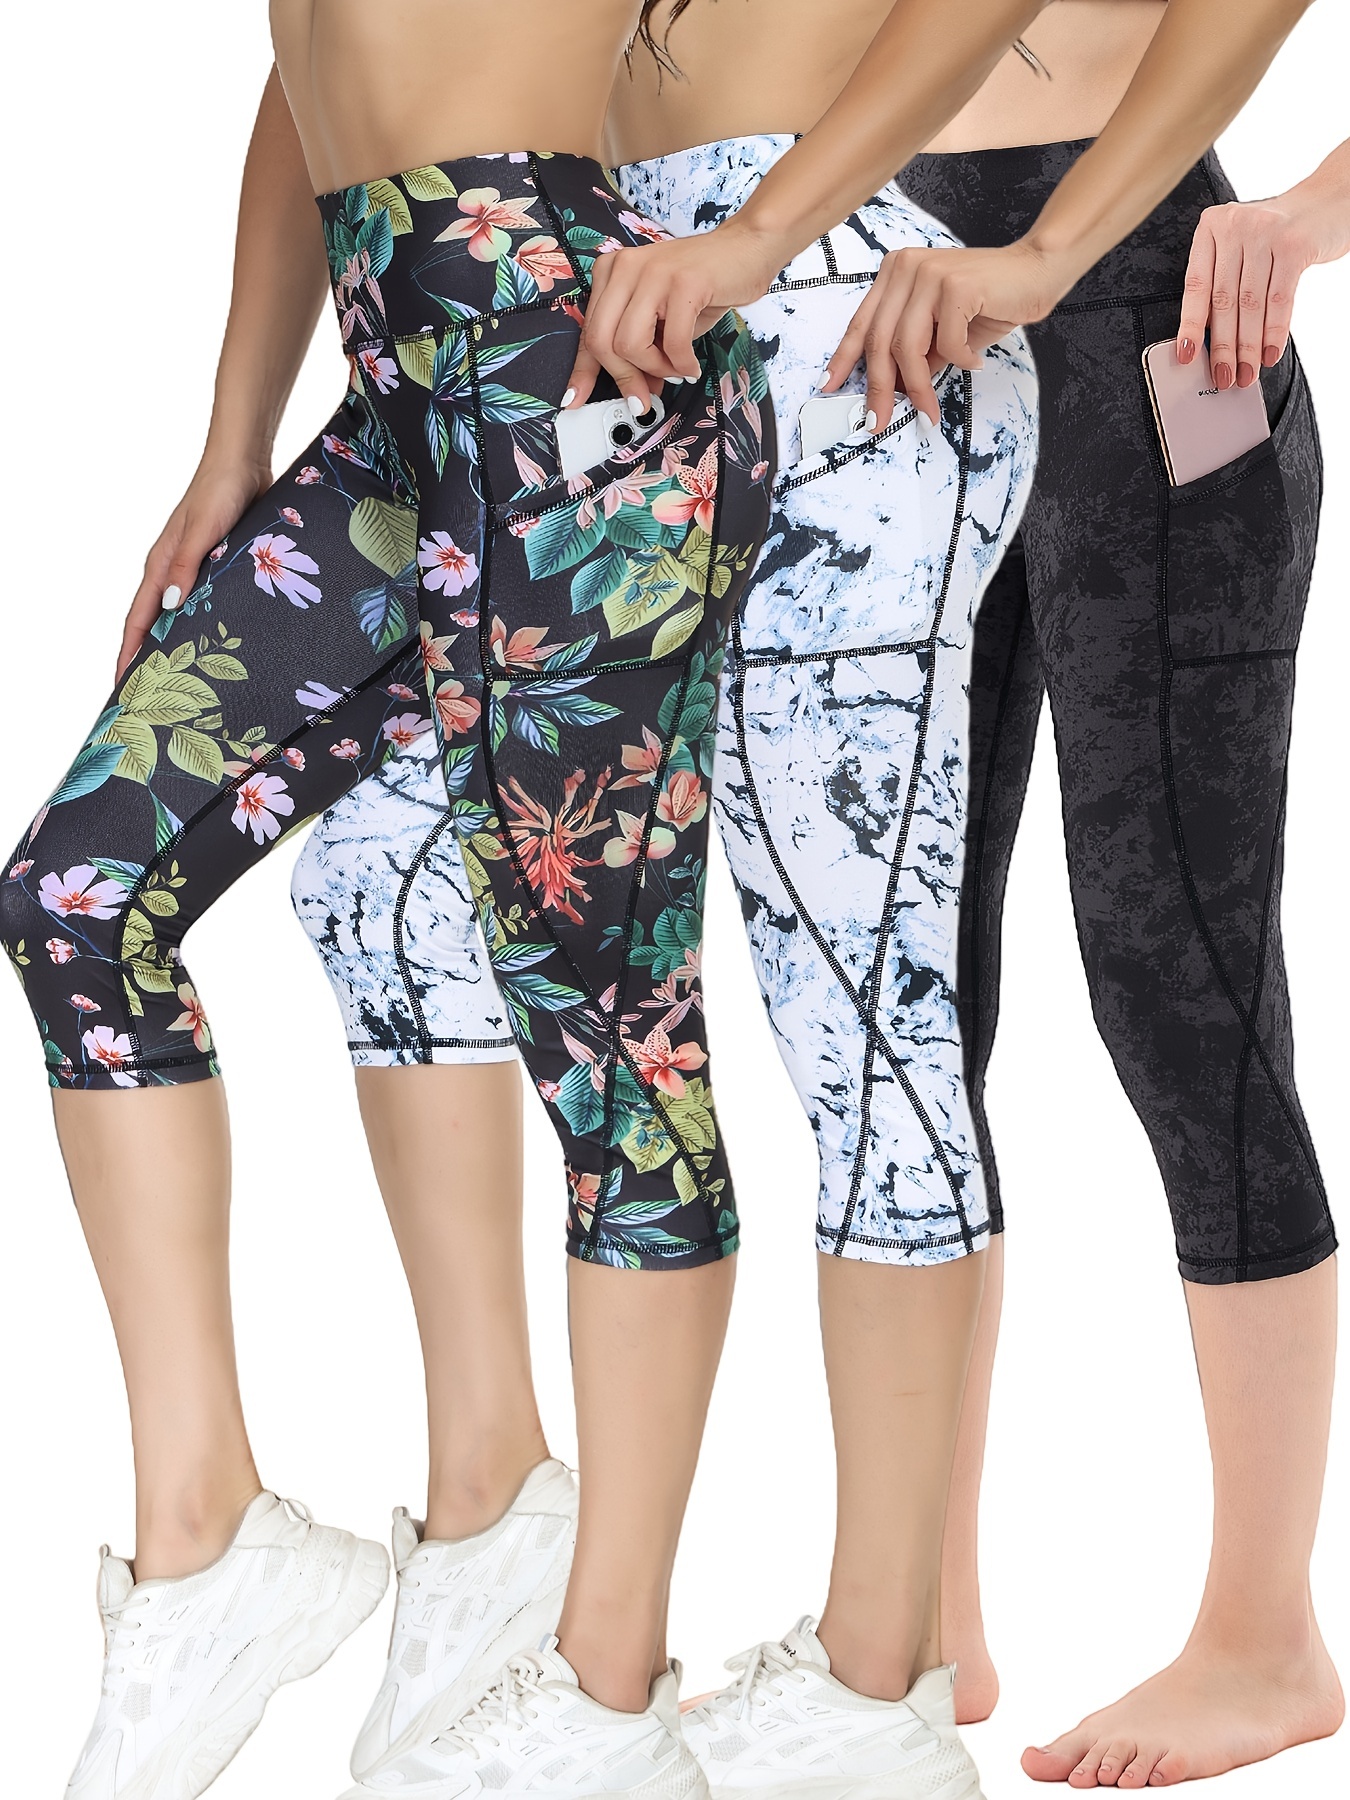  High Waisted Capri Leggings For Women No See-Through-Soft  Athletic Tummy Control Black Pants For Running Yoga Workout1 Pack Capri  Black